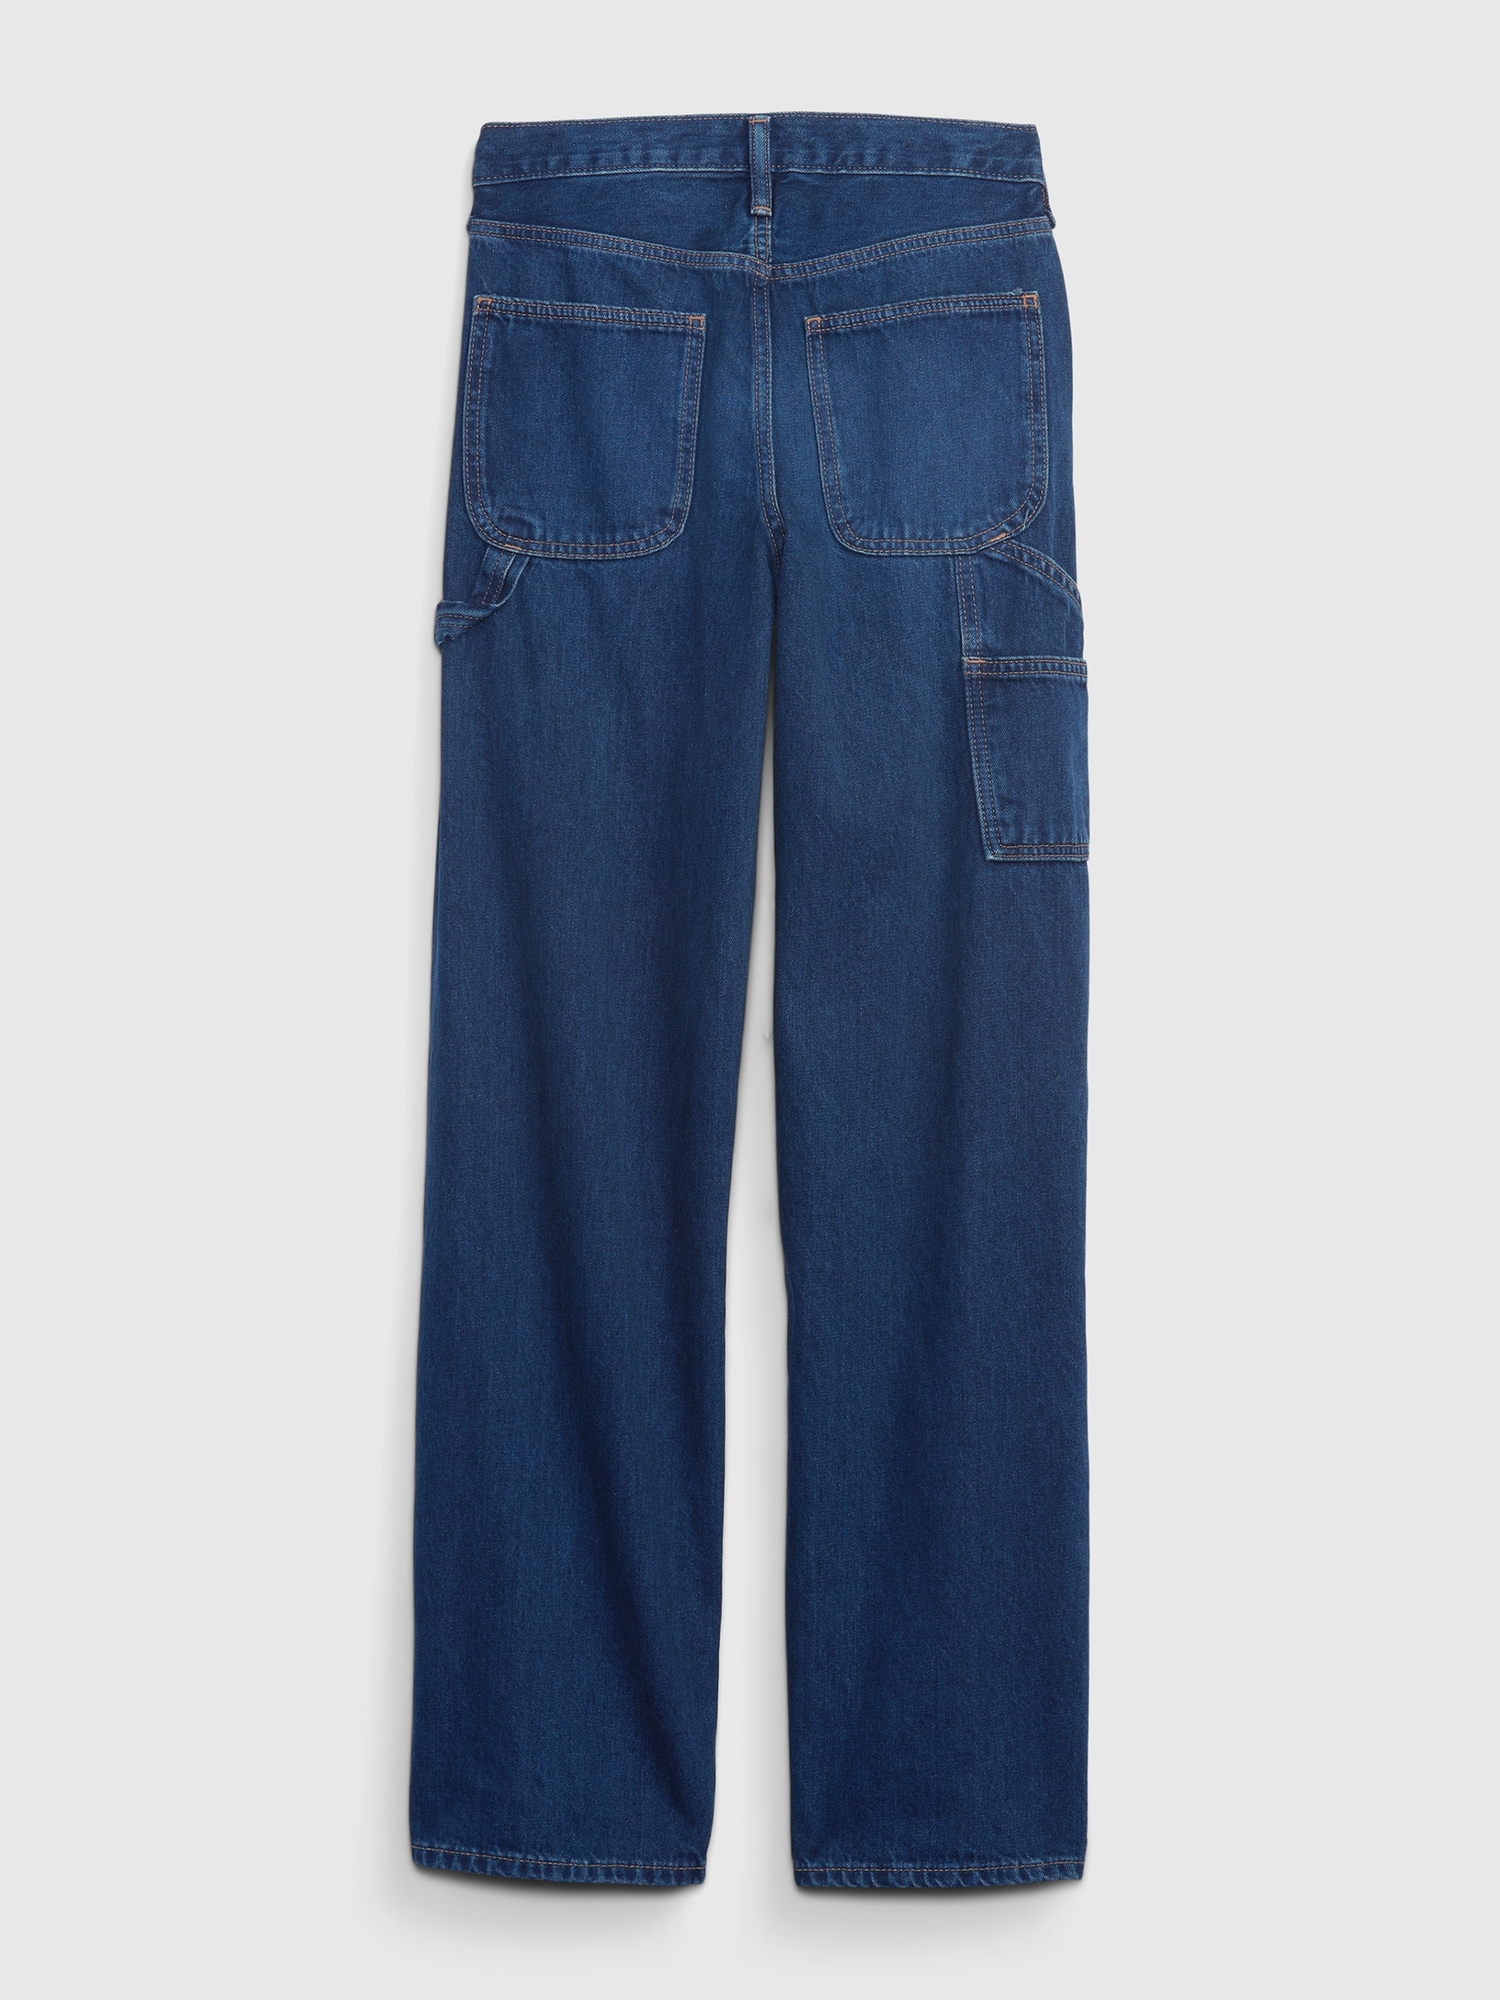 Boys Old Navy Denim Carpenter Shorts Blue Jean Size 10